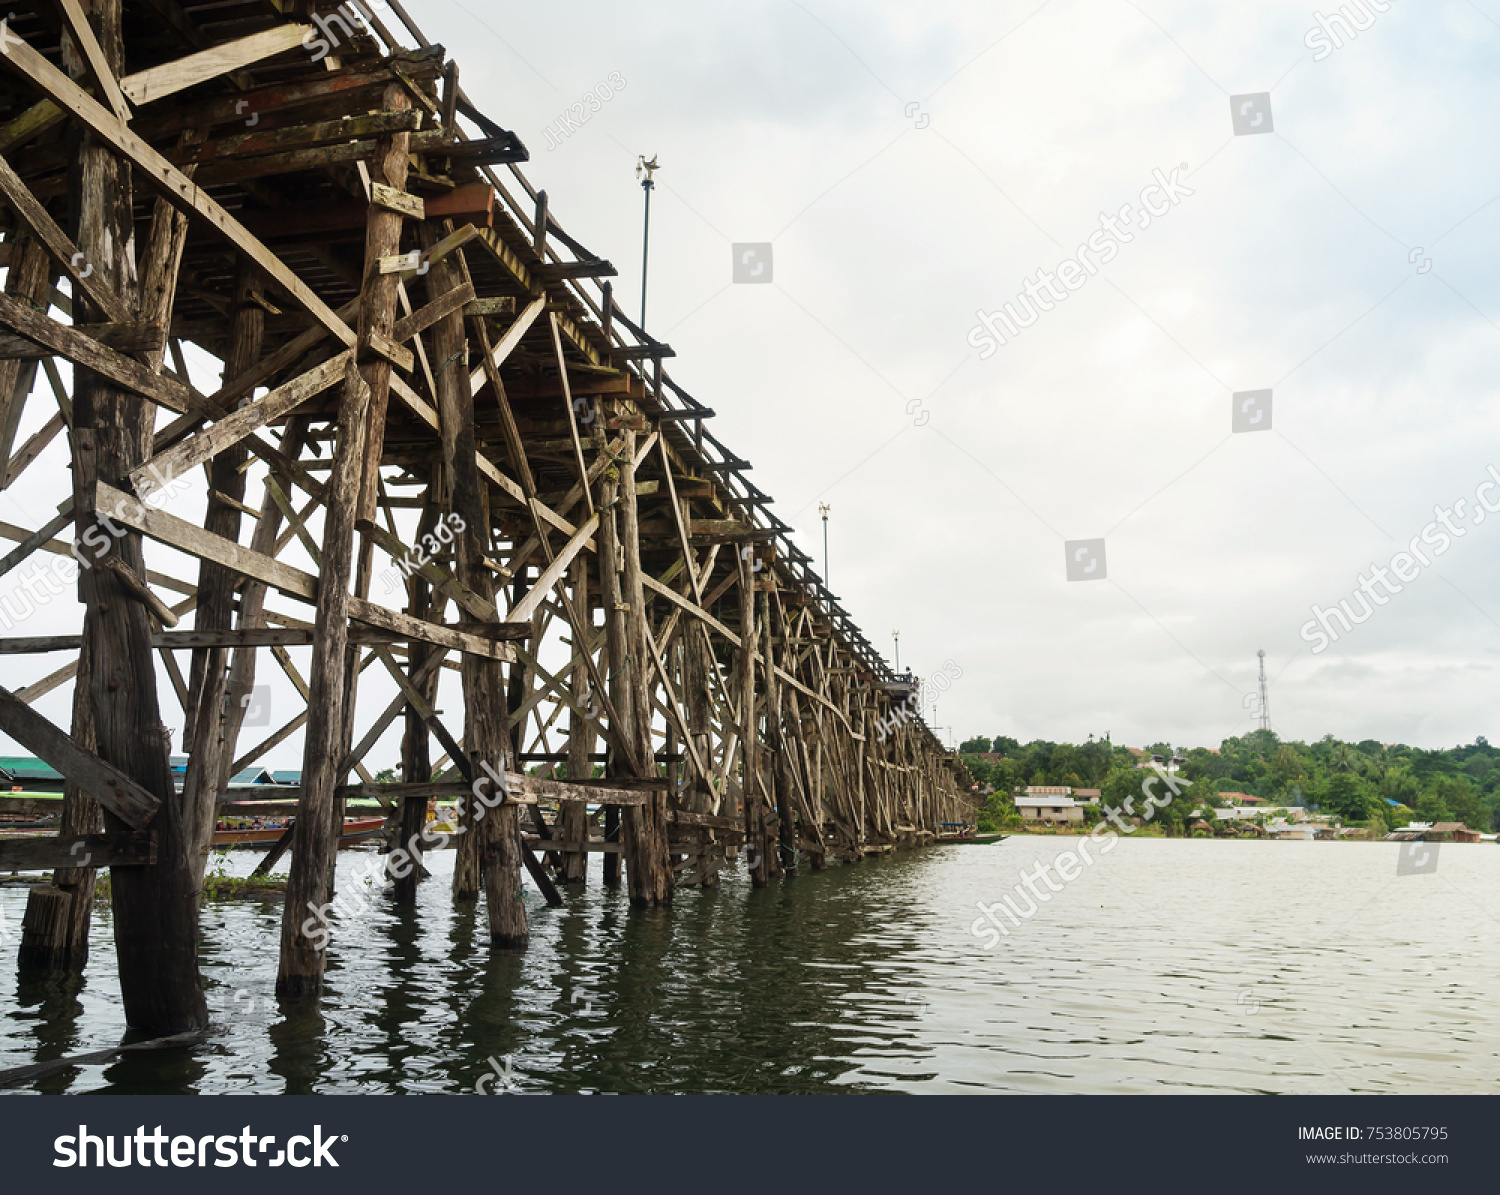 Landscape of The wooden bridge (Mon bridge) at Sangkhlaburi, Kanchanaburi,Thailand. It's the second longest wooden bridge in the world.
 #753805795